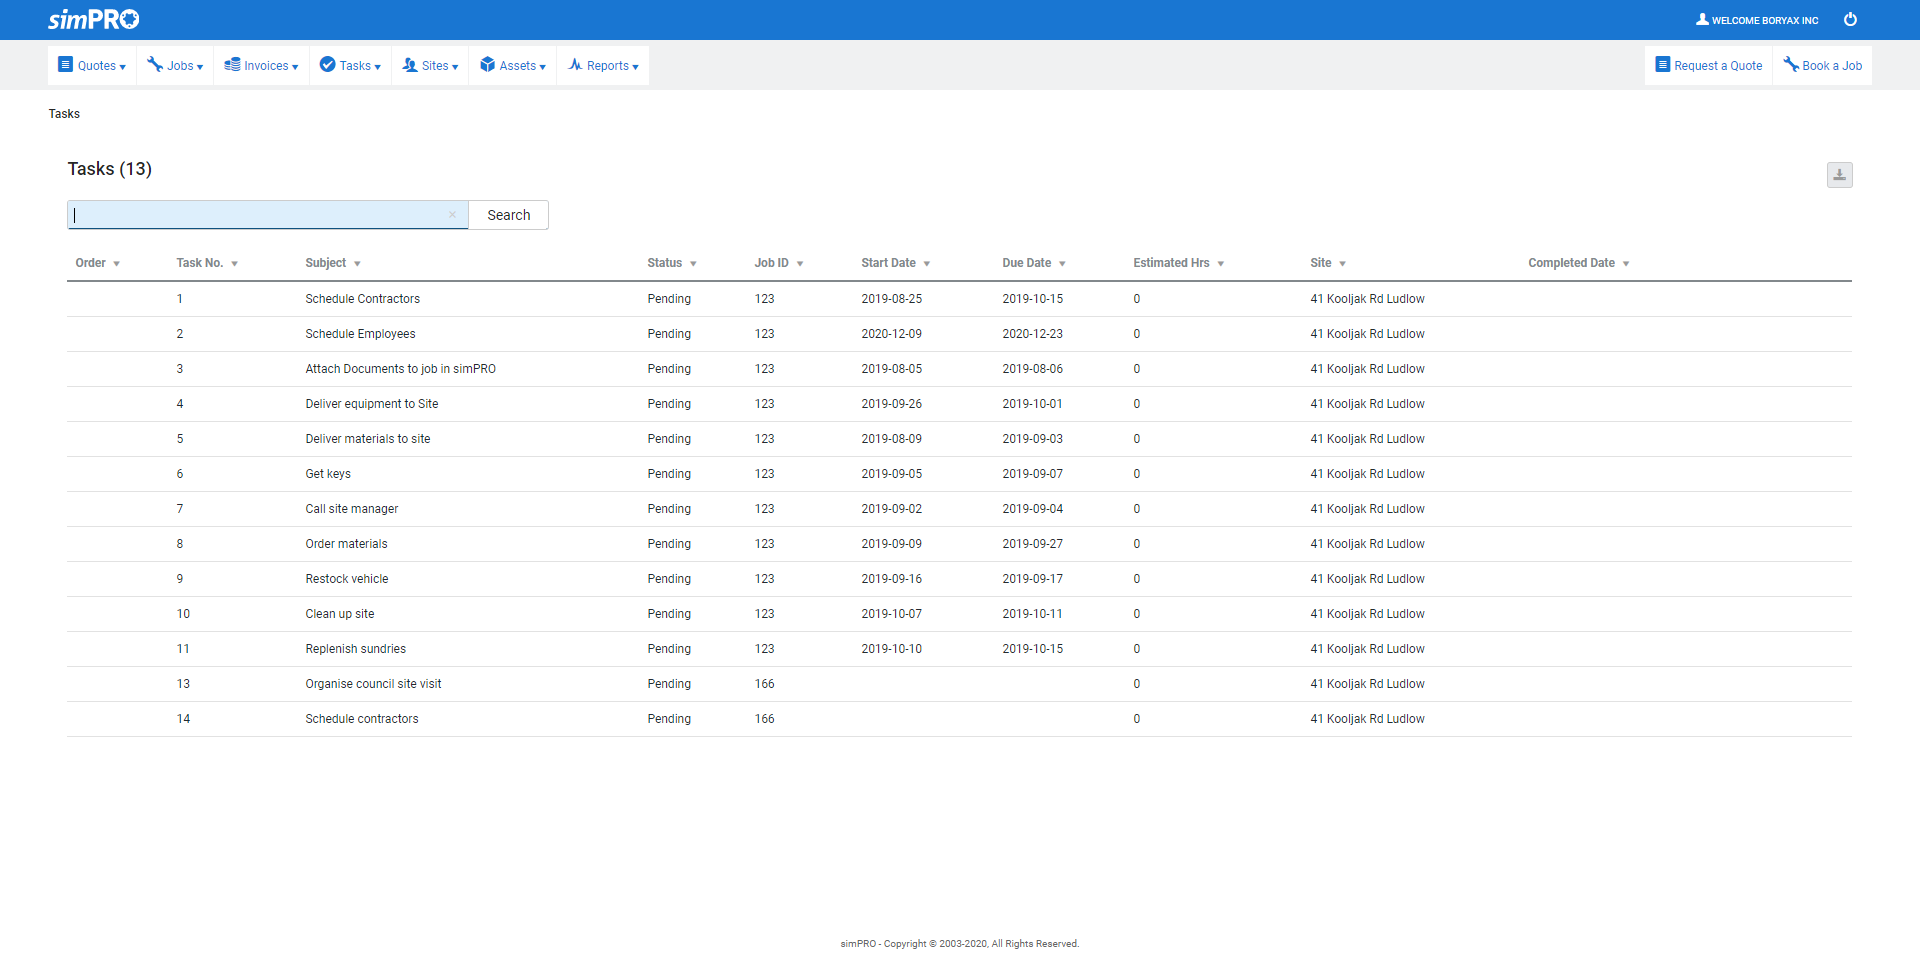 A screenshot of the tasks list in the customer portal.